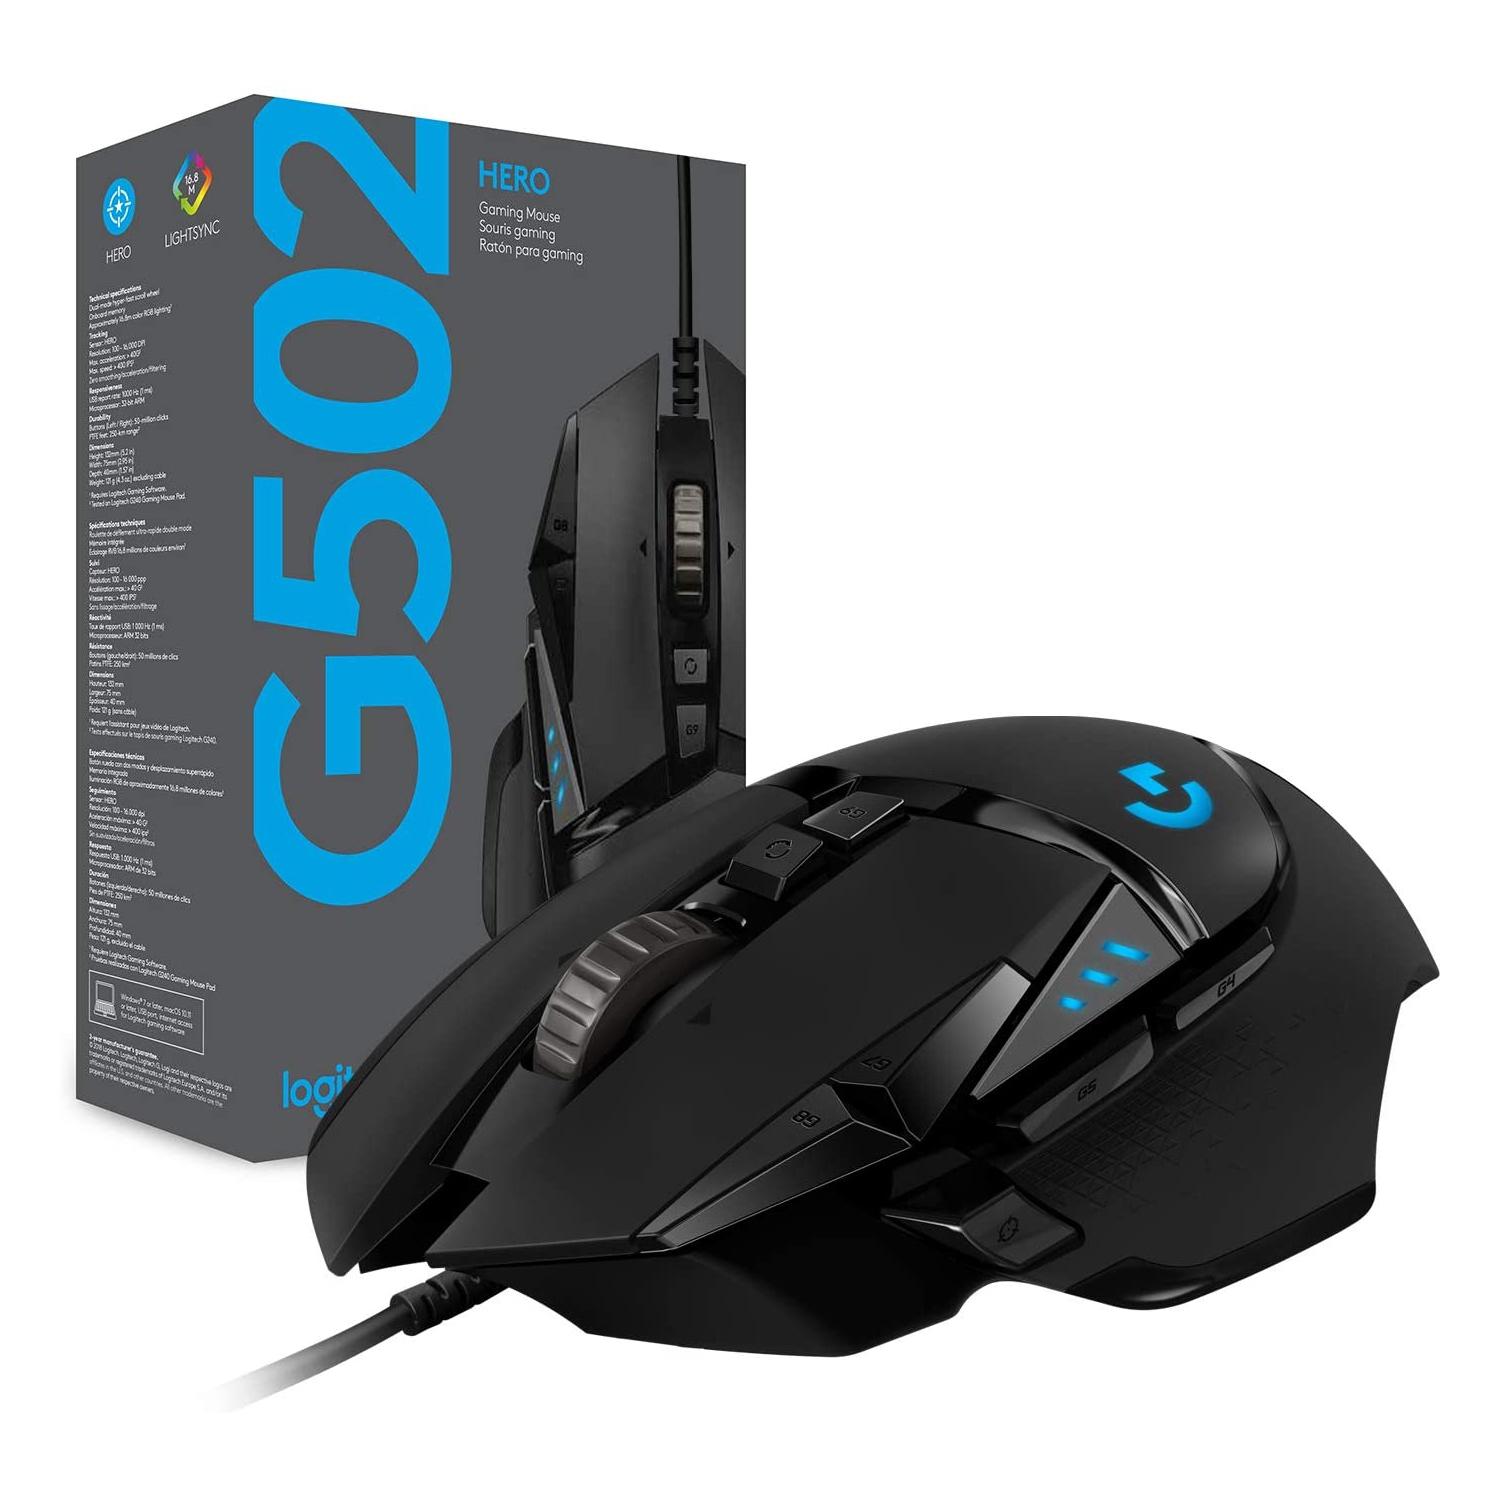 Logitech G502 HERO Gaming Mouse - Brand New